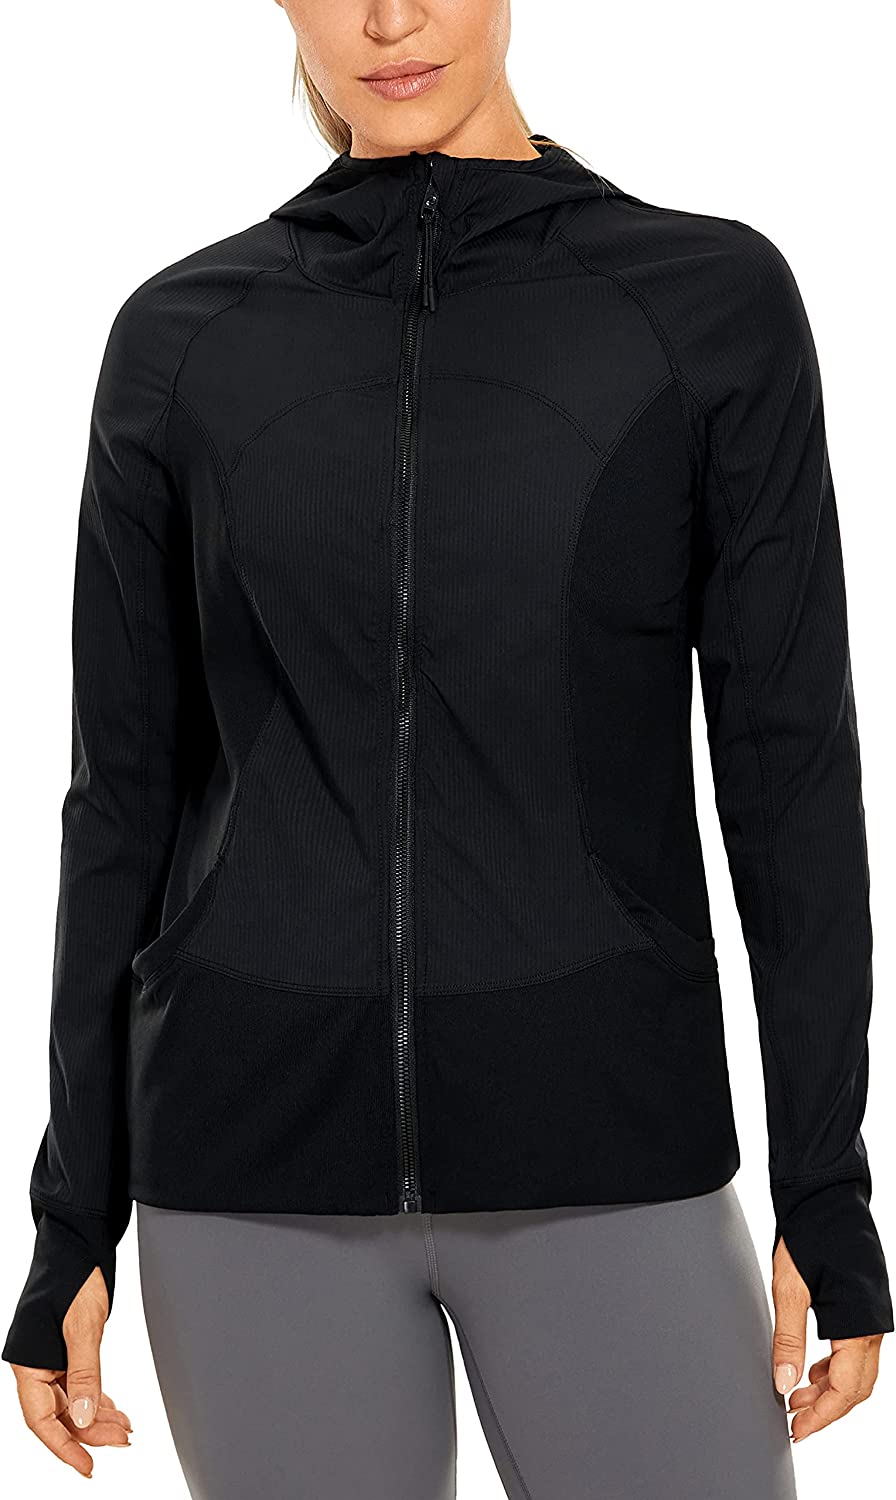 CRZ YOGA Women's Lightweight Breathable Athletic Jackets Full Zip  Sweatshirt Run